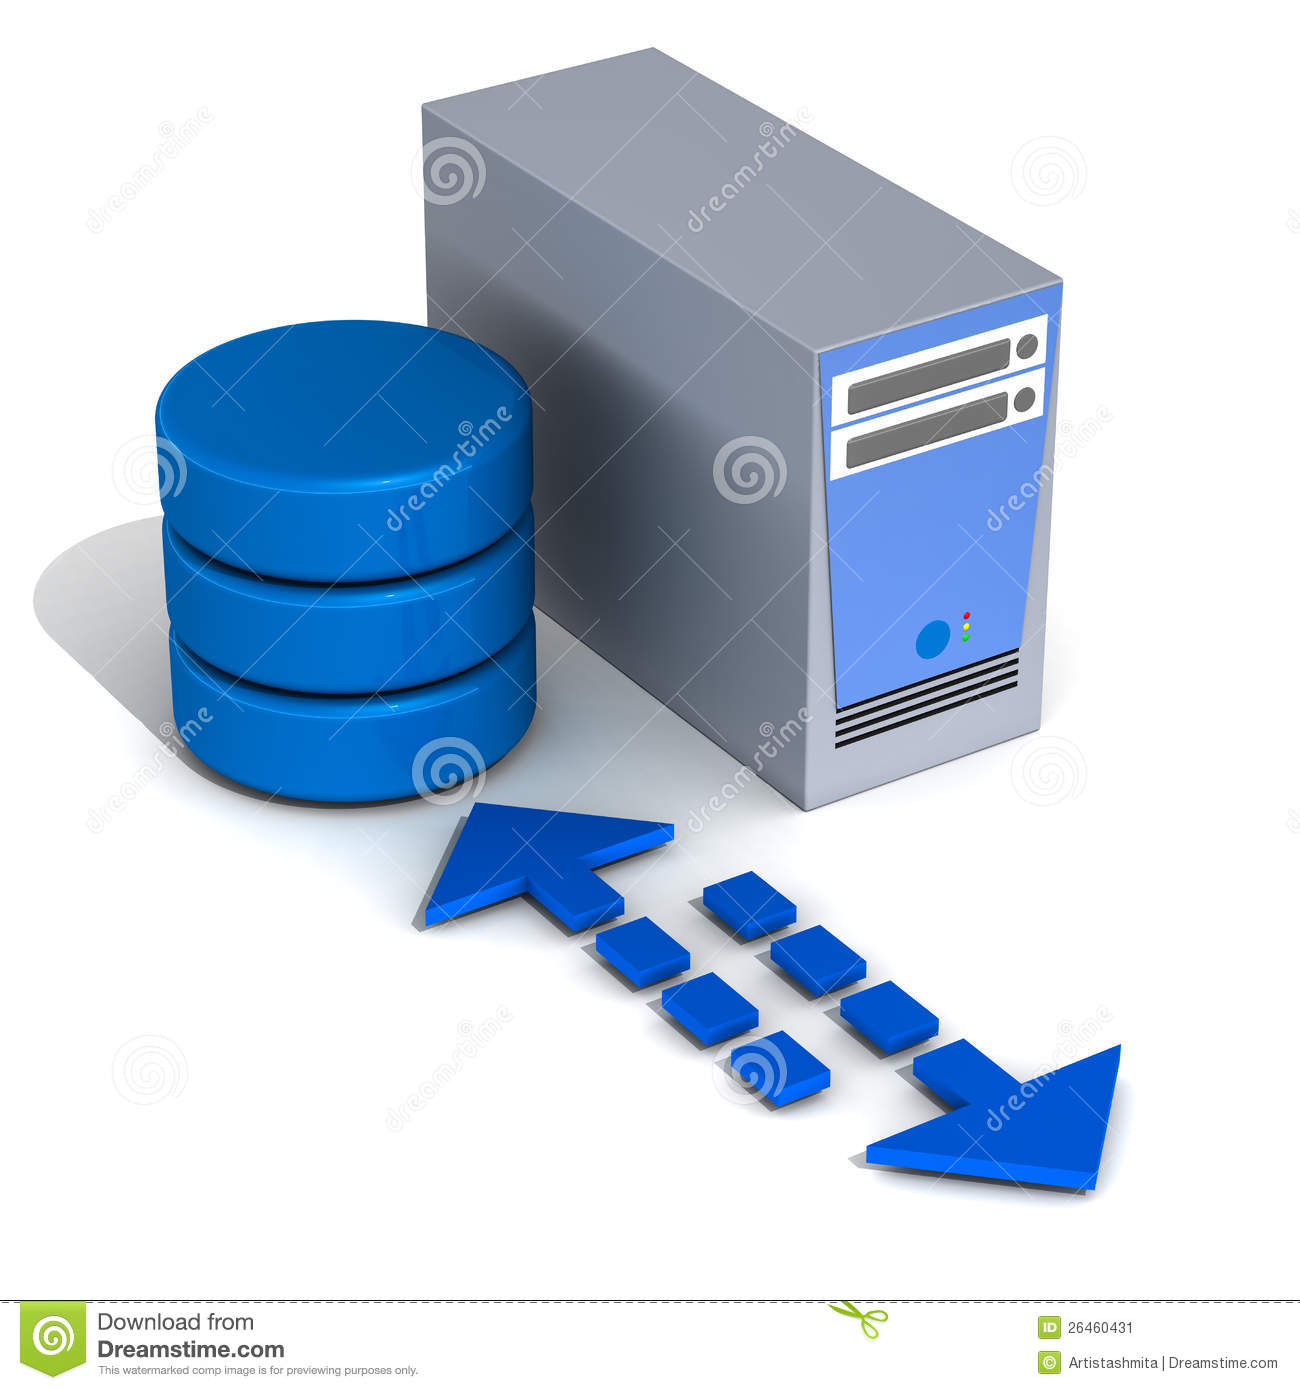 Application Or Database Server Showing Exchange Of Data On Network